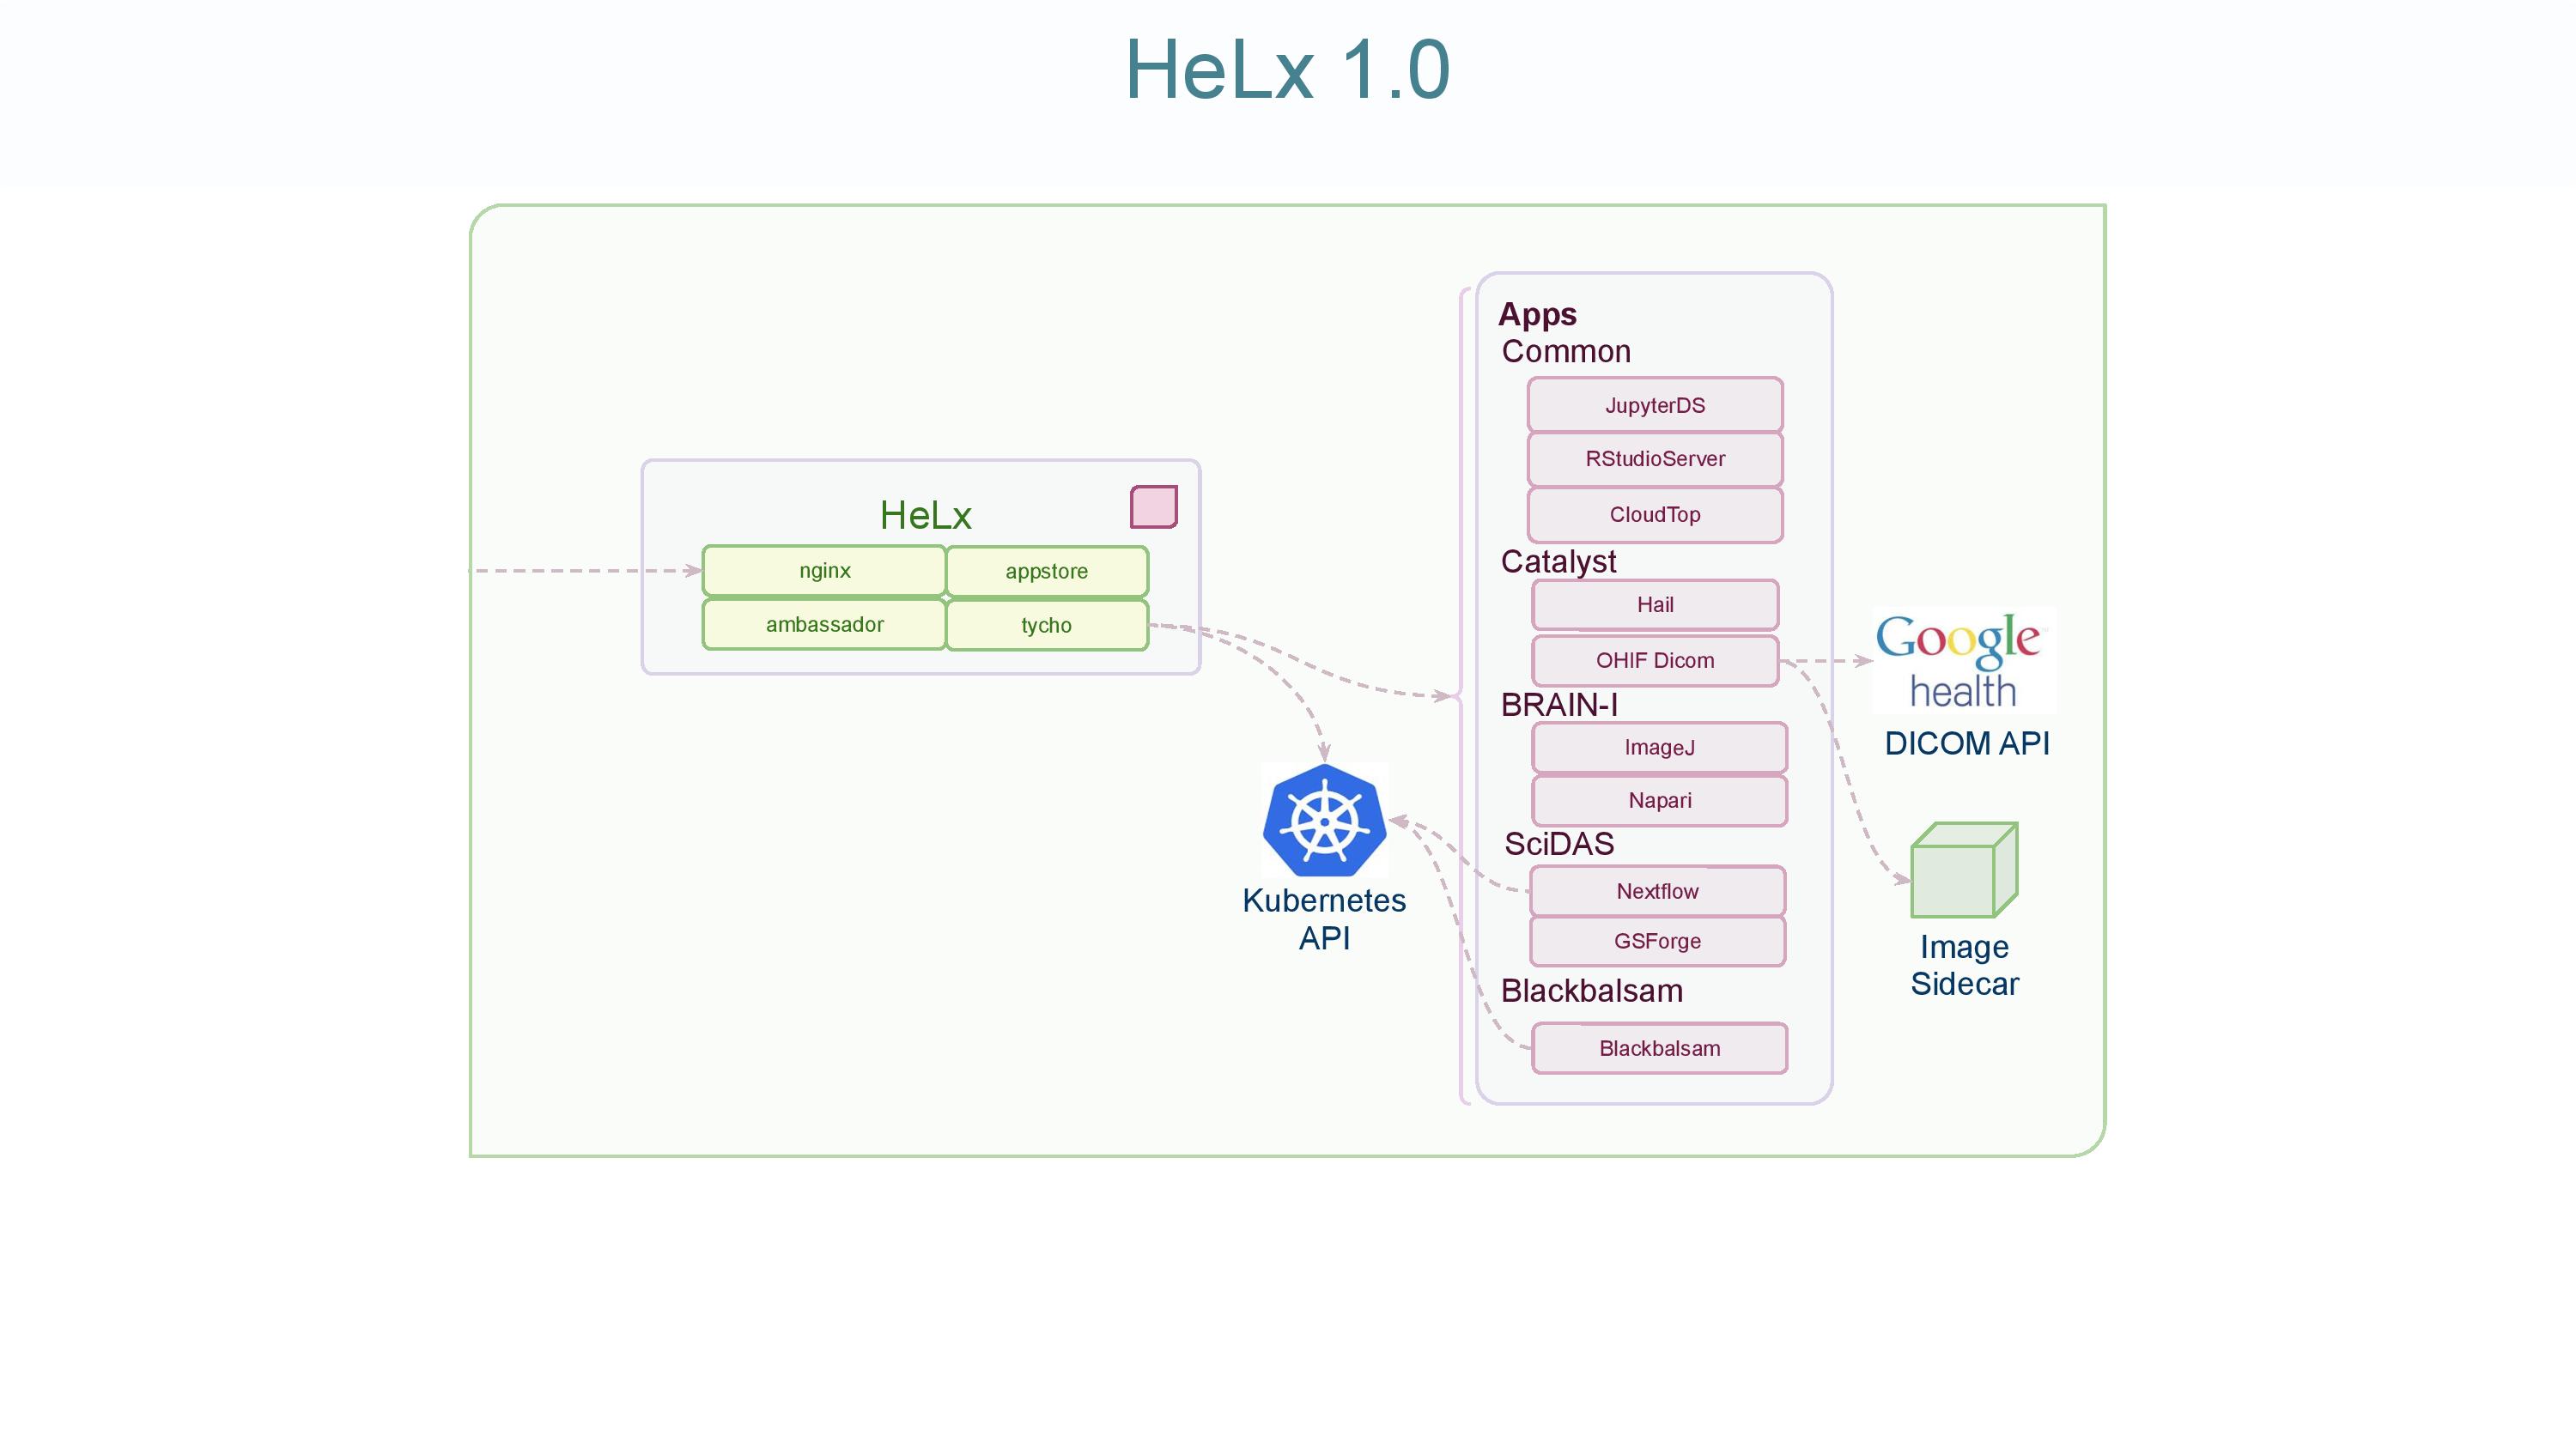 HeLx 1.0 diagram